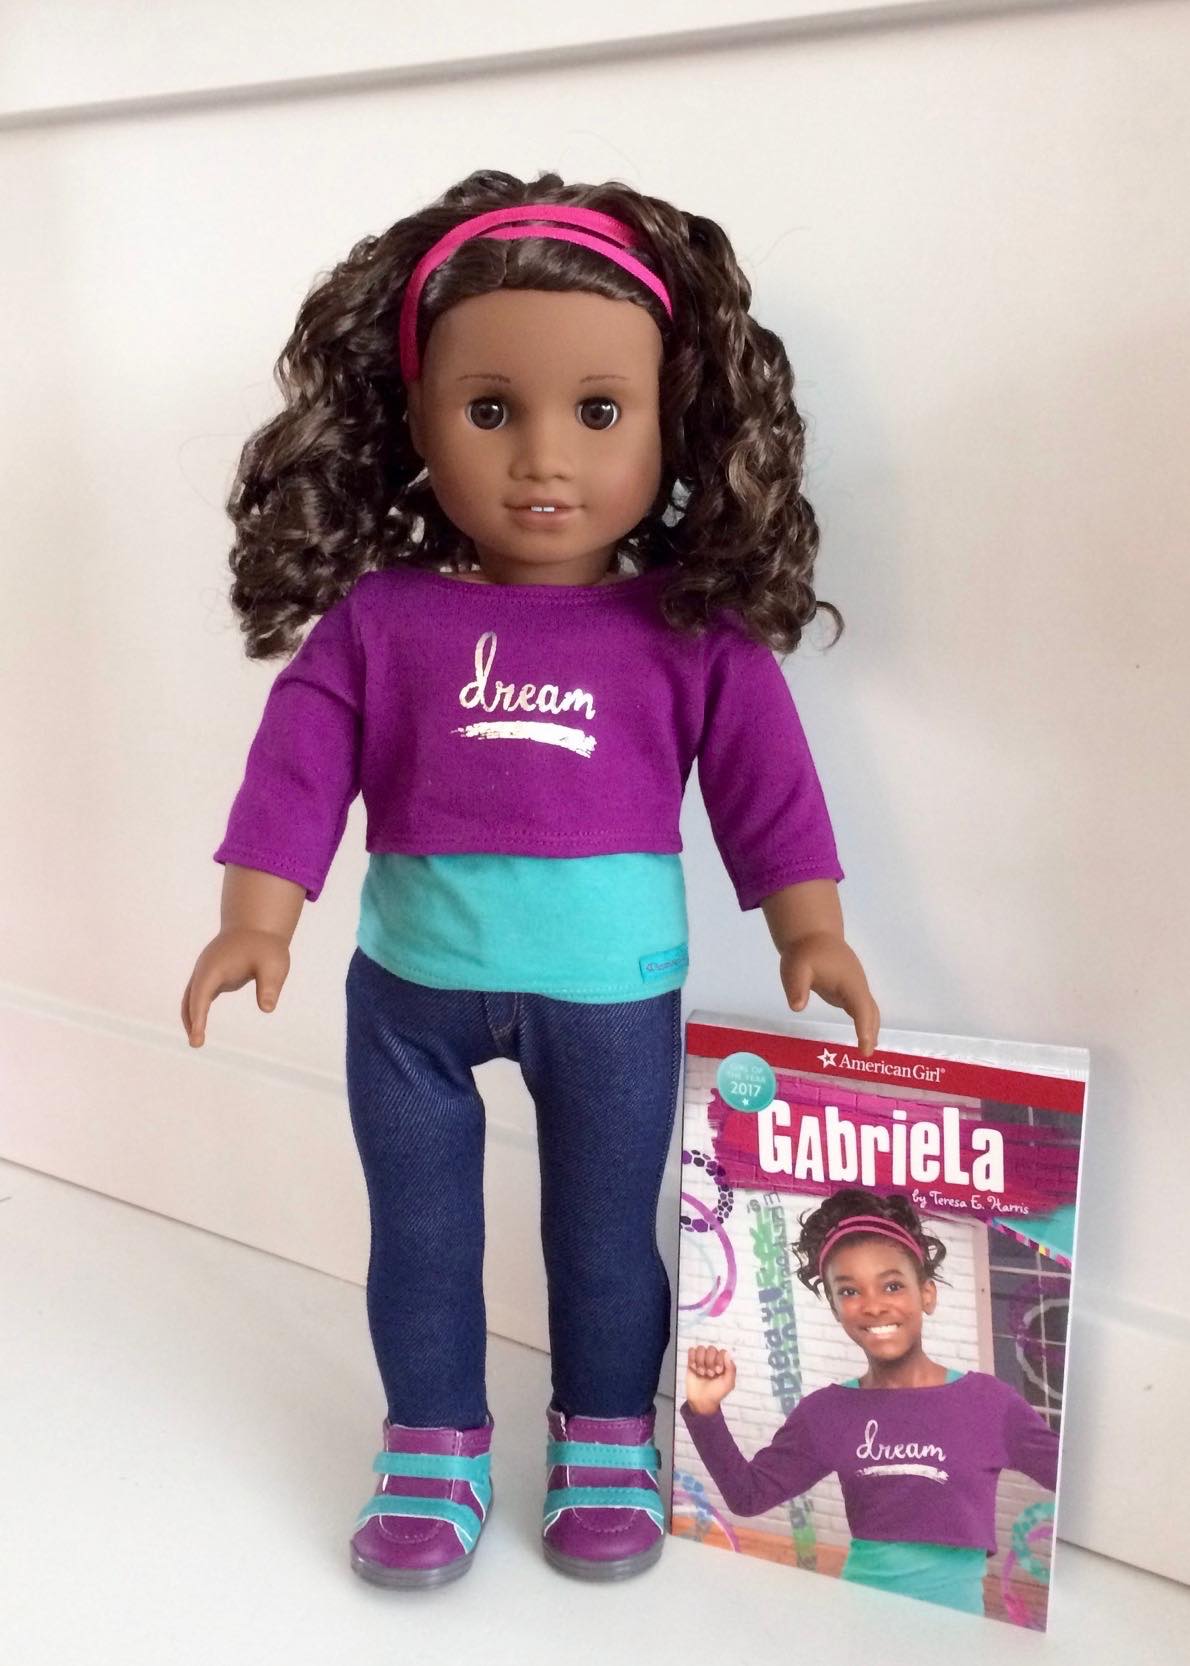 the 2017 american girl doll